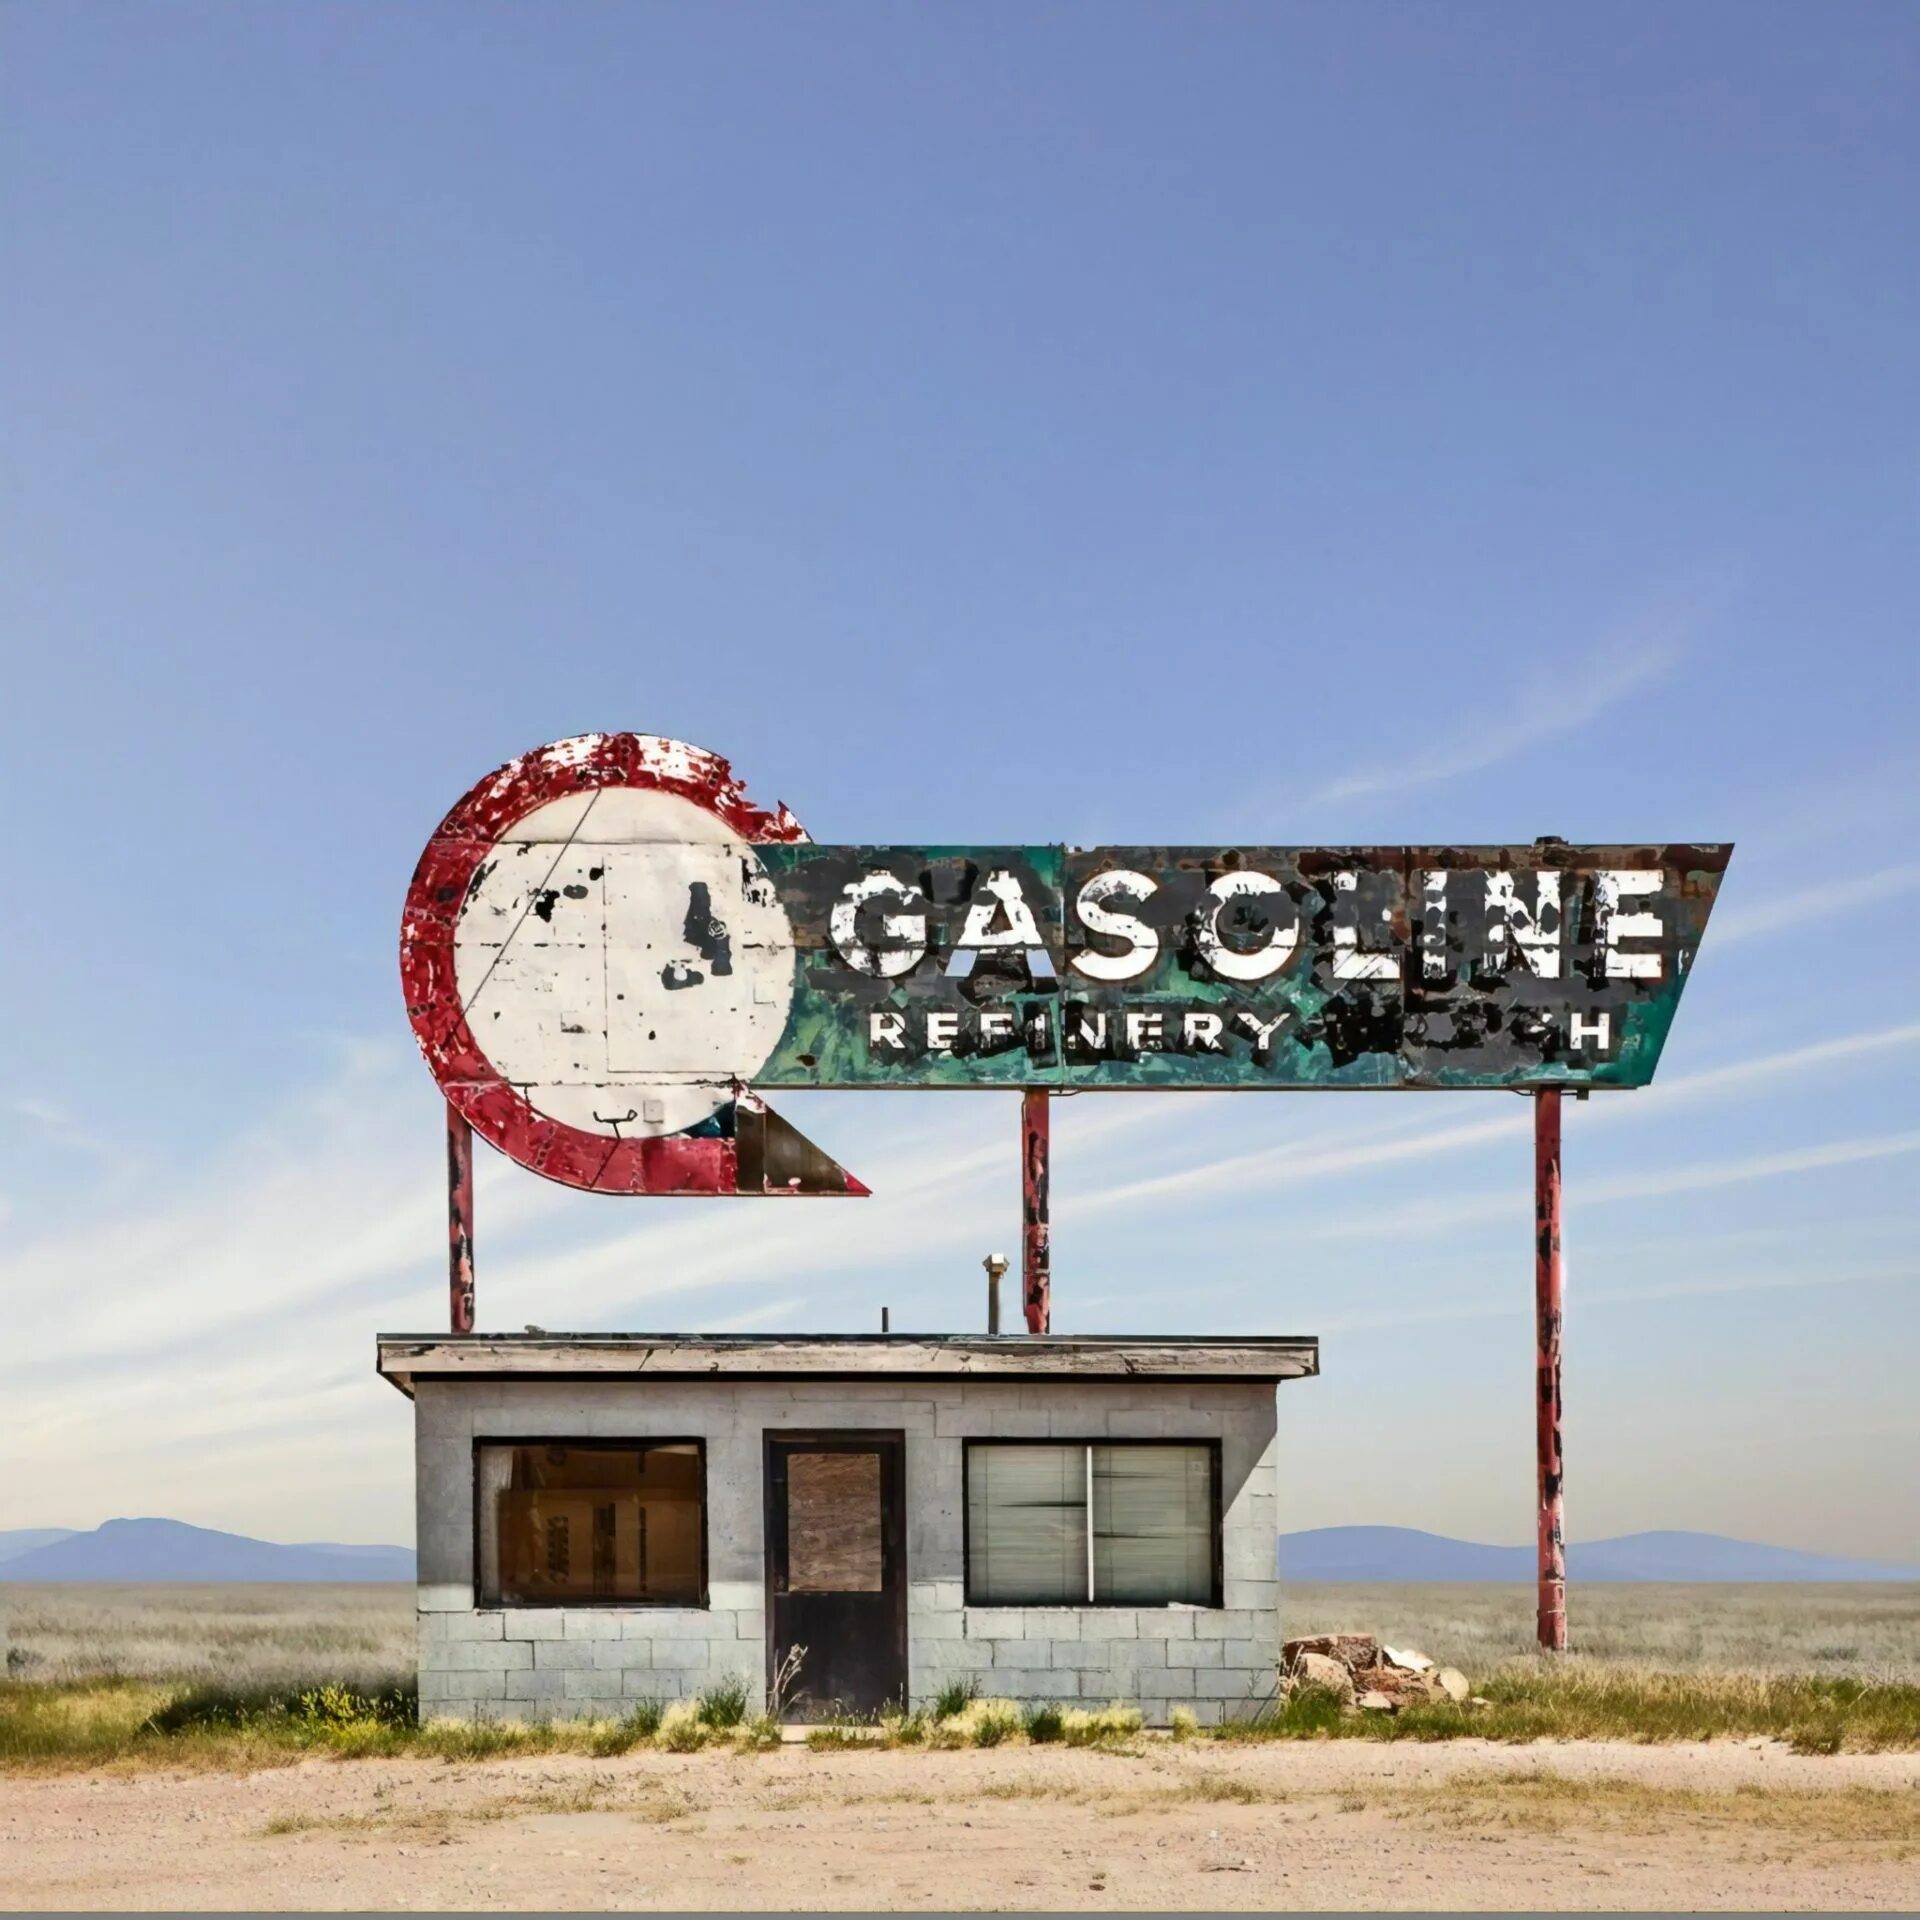 Gas Station Desert. American Gas Station aesthetic. Art Village Gas USA.